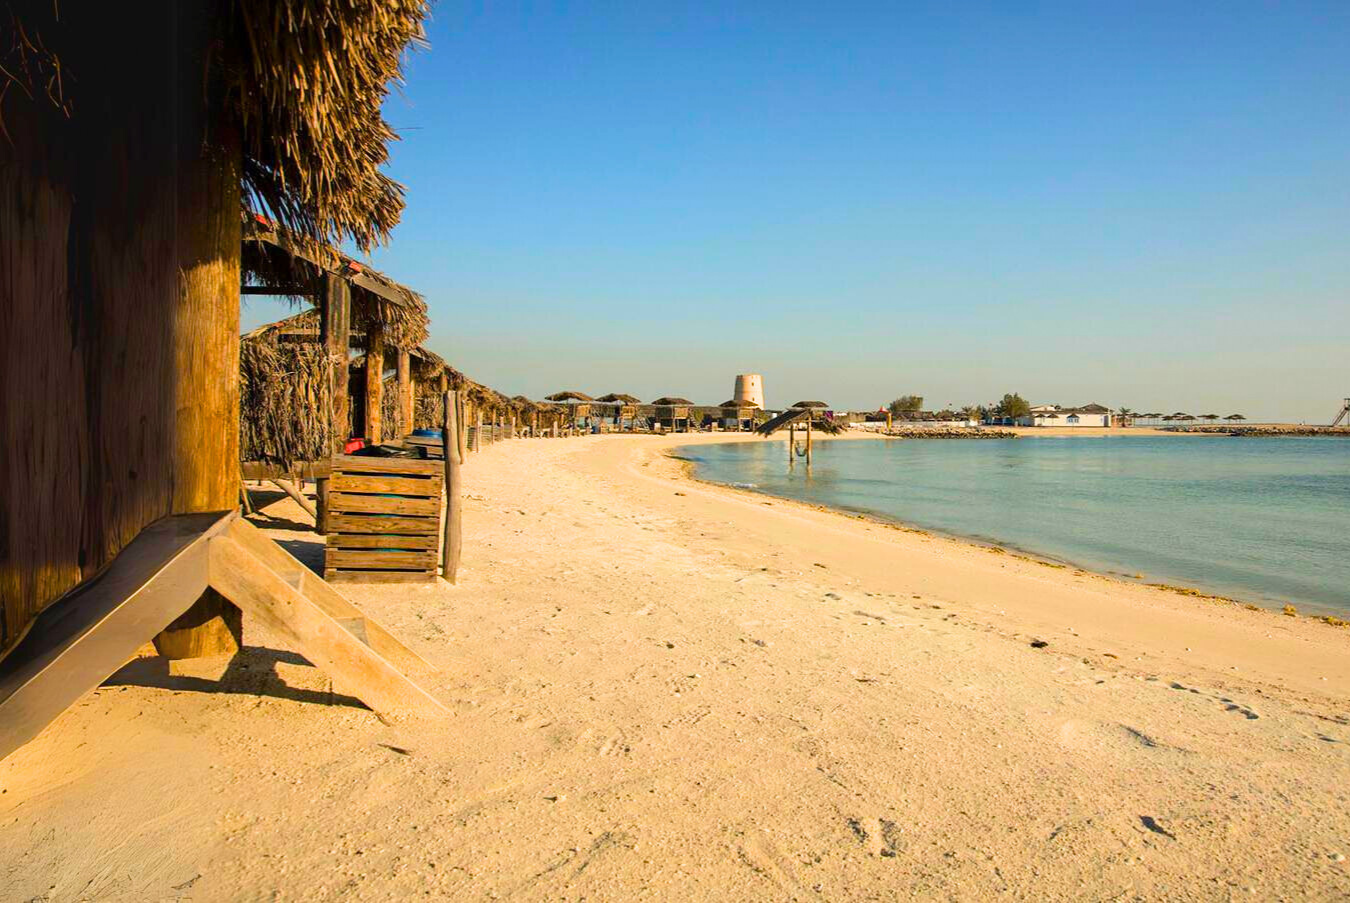 Al Dar Island Bahrain huts